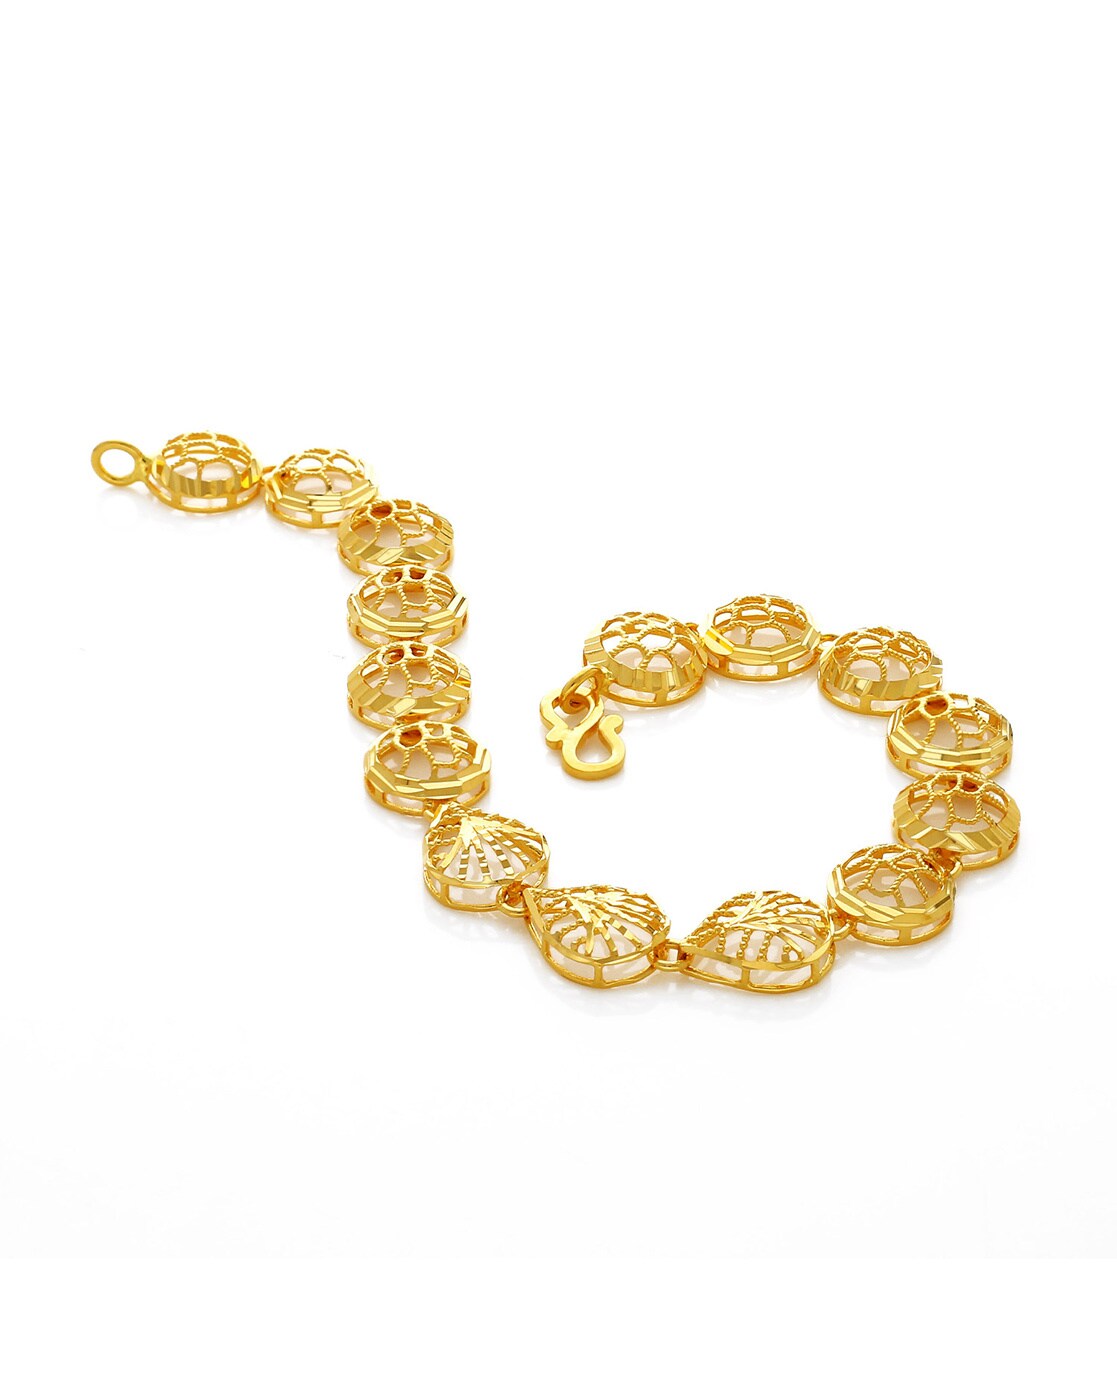 Malabar gold bracelet designs with price | Latest gold bracelet designs  with price | Gold bracelet - YouTube